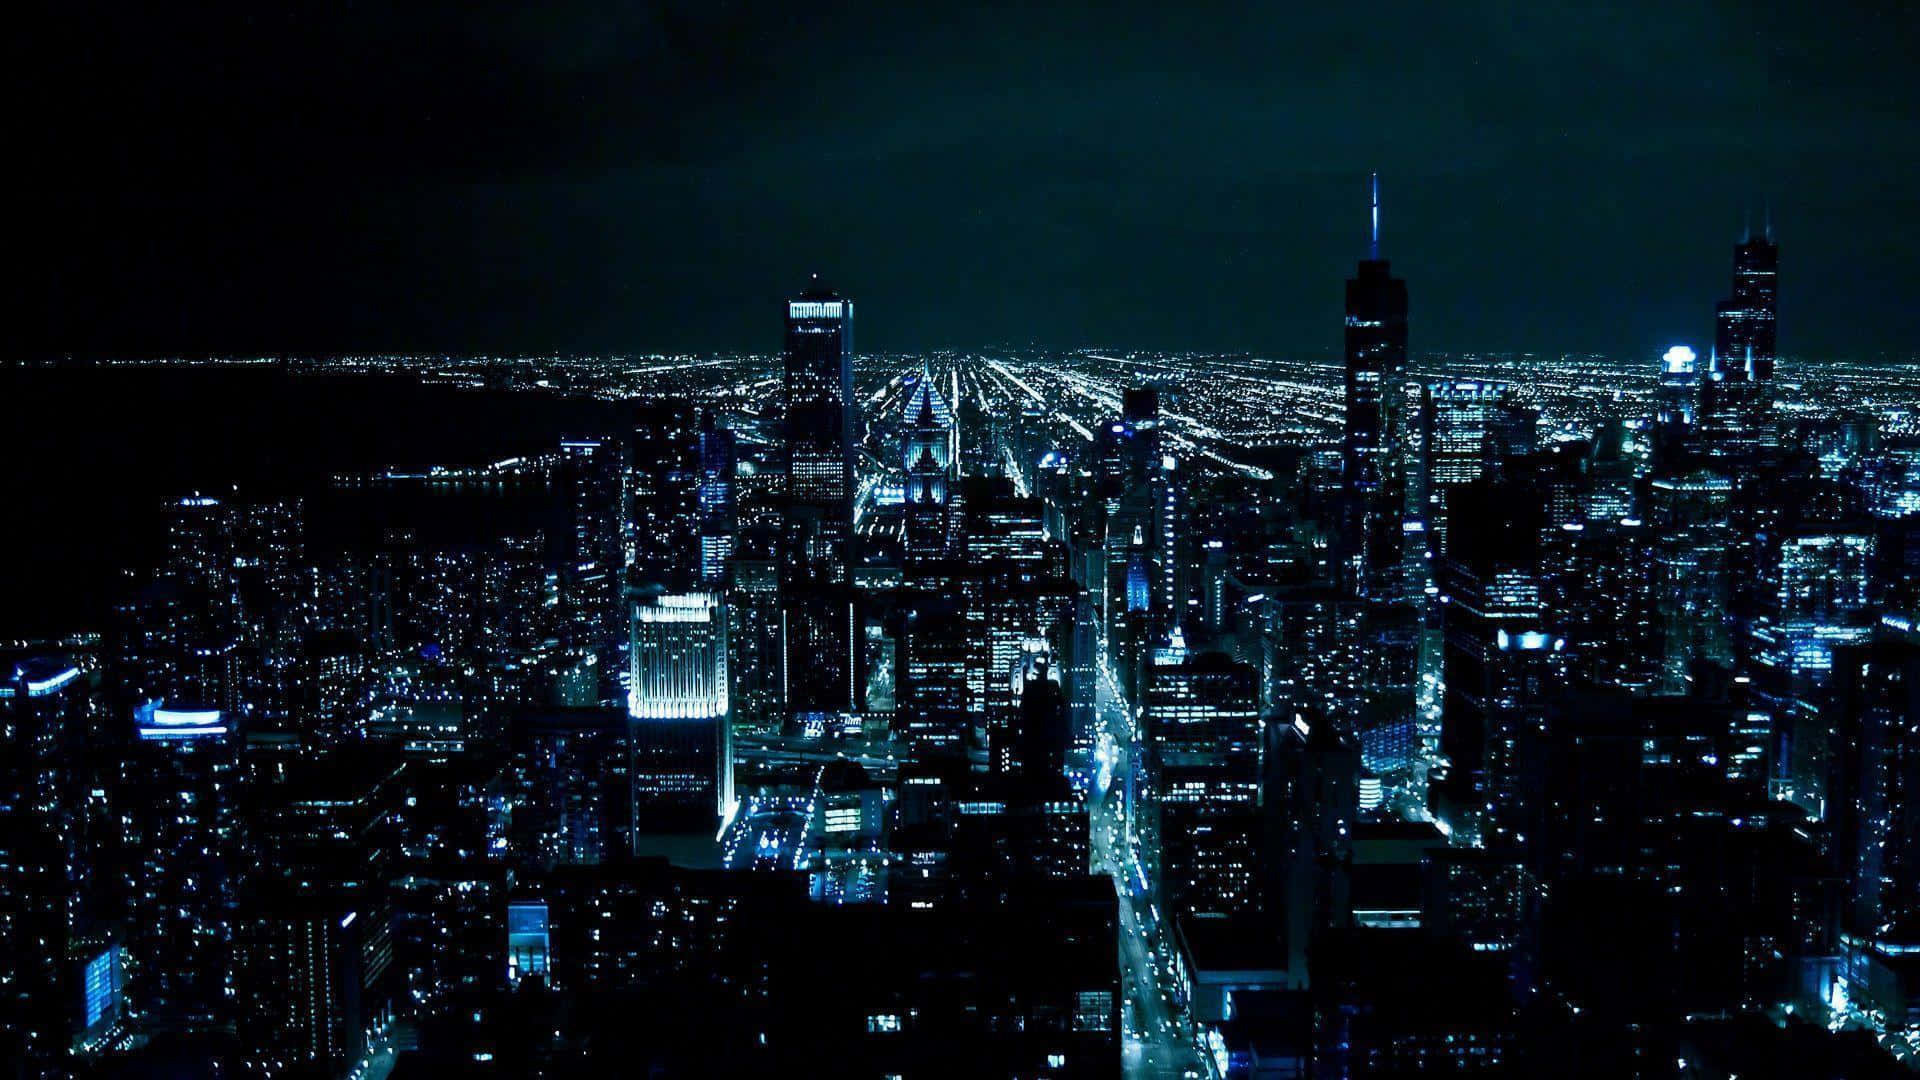 Caption: Nighttime Skyline of Gotham City